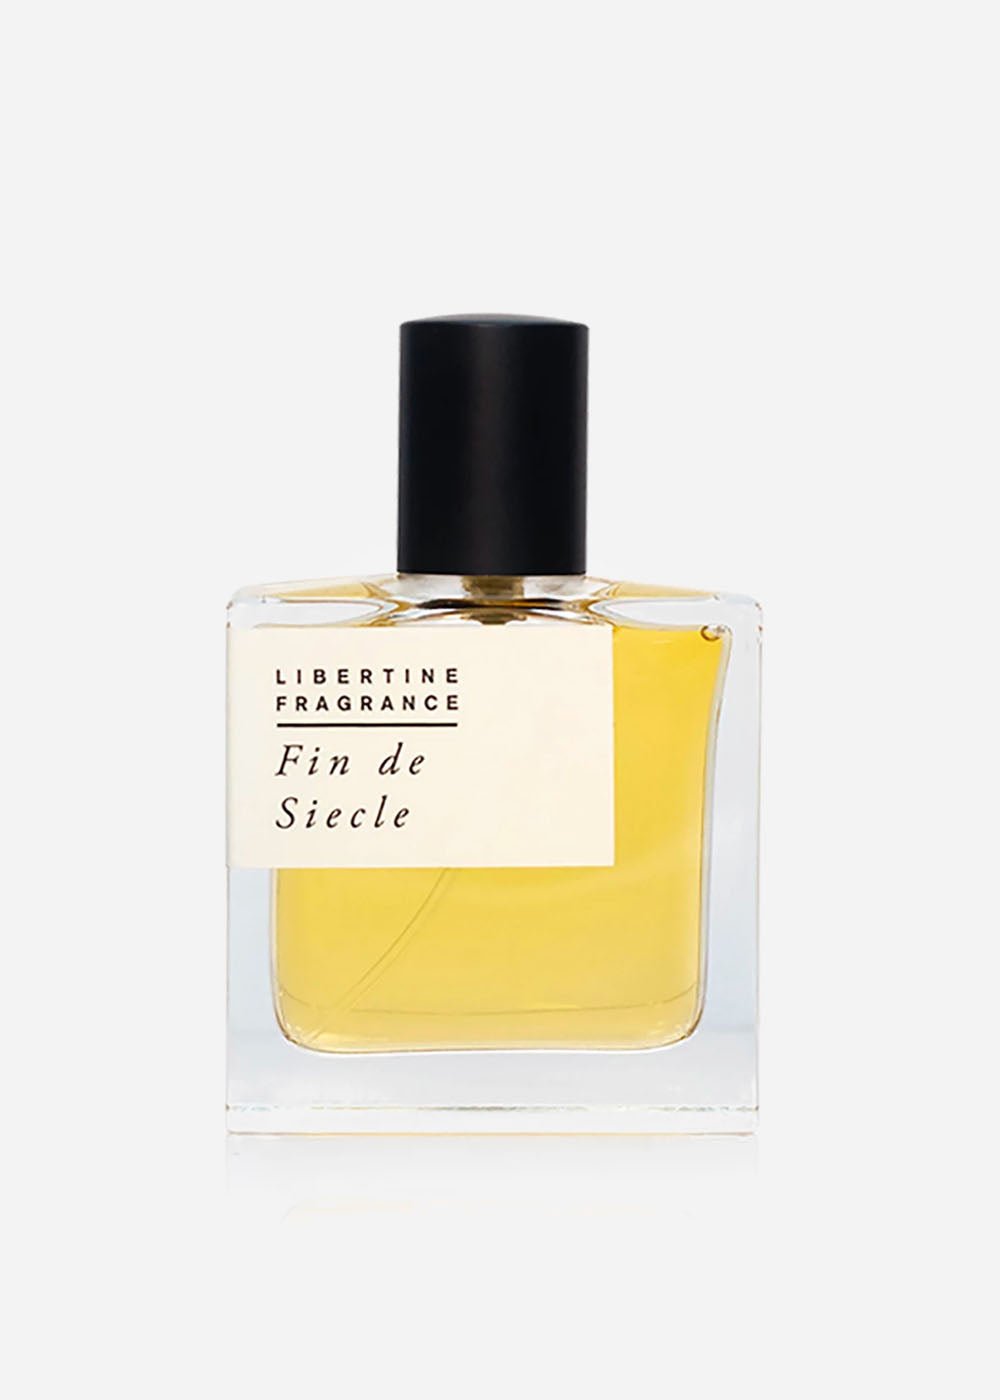 Libertine Fragrance Fin de Siecle Eau De Parfum - New Classics Studios Sustainable Ethical Fashion Canada